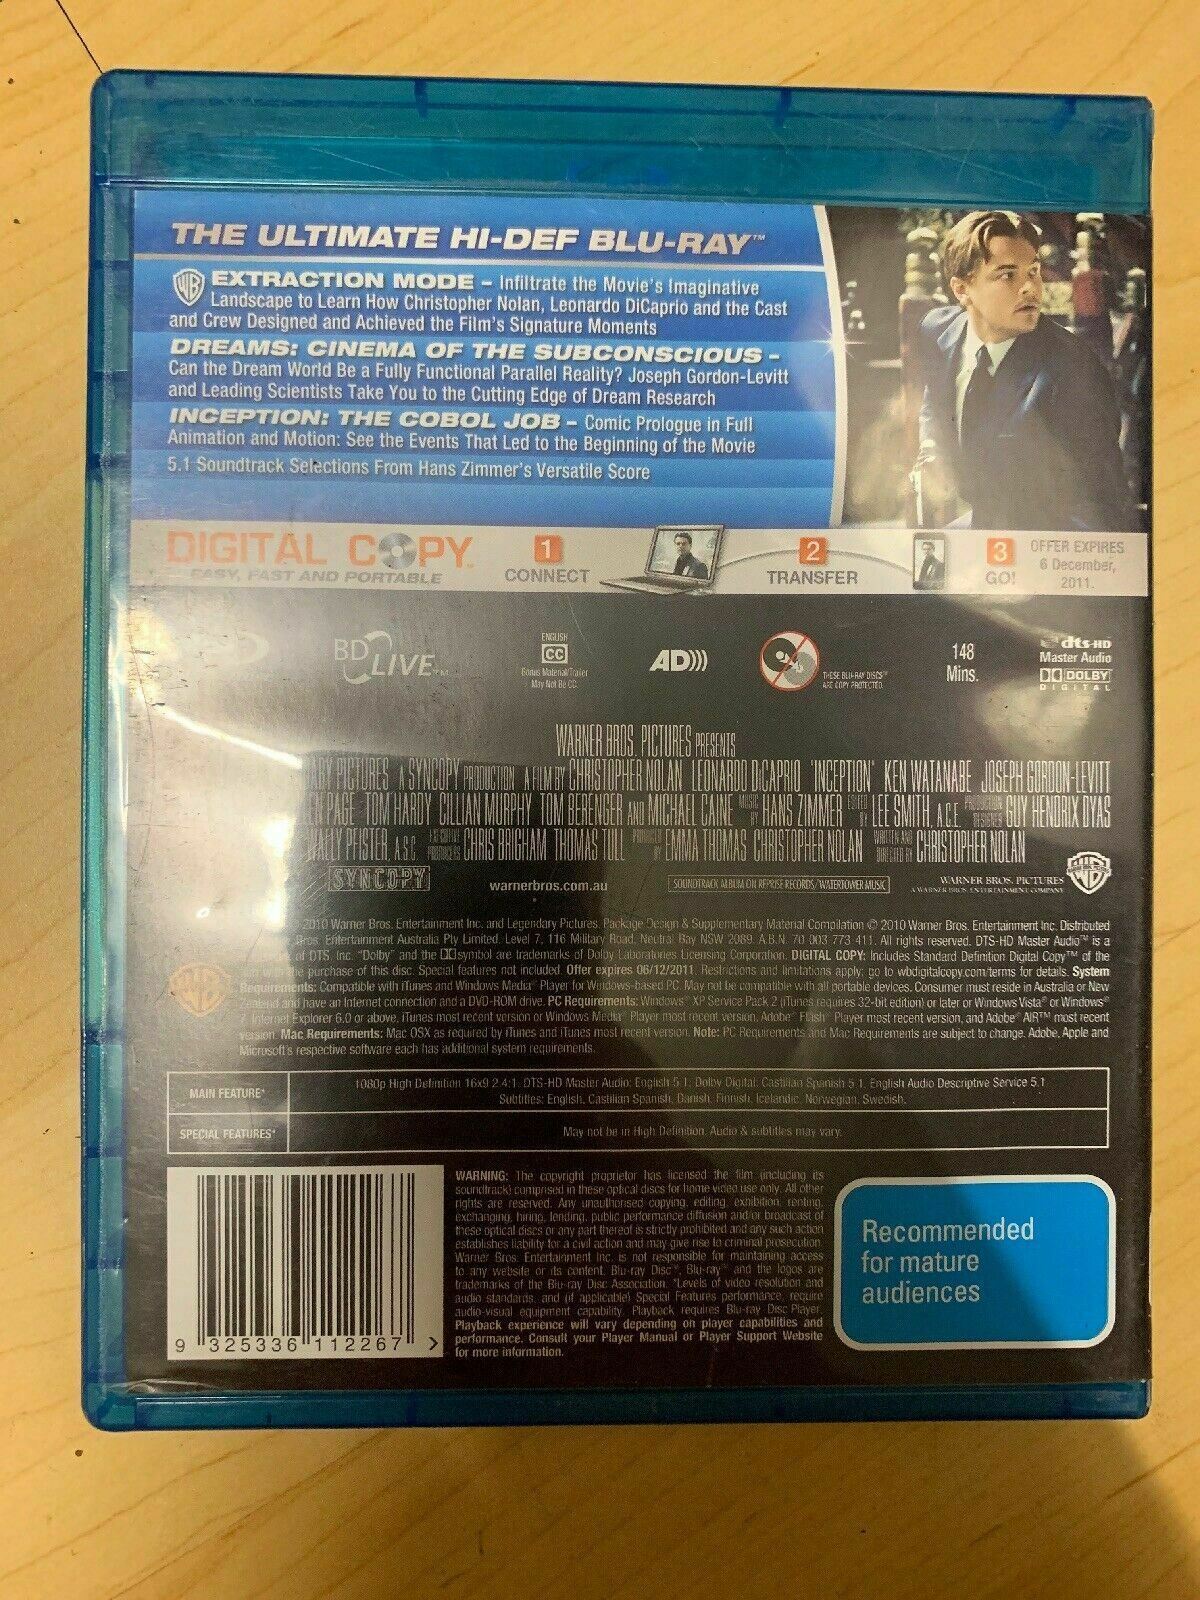 Inception (Blu-ray, 2010, 4-Disc Set)